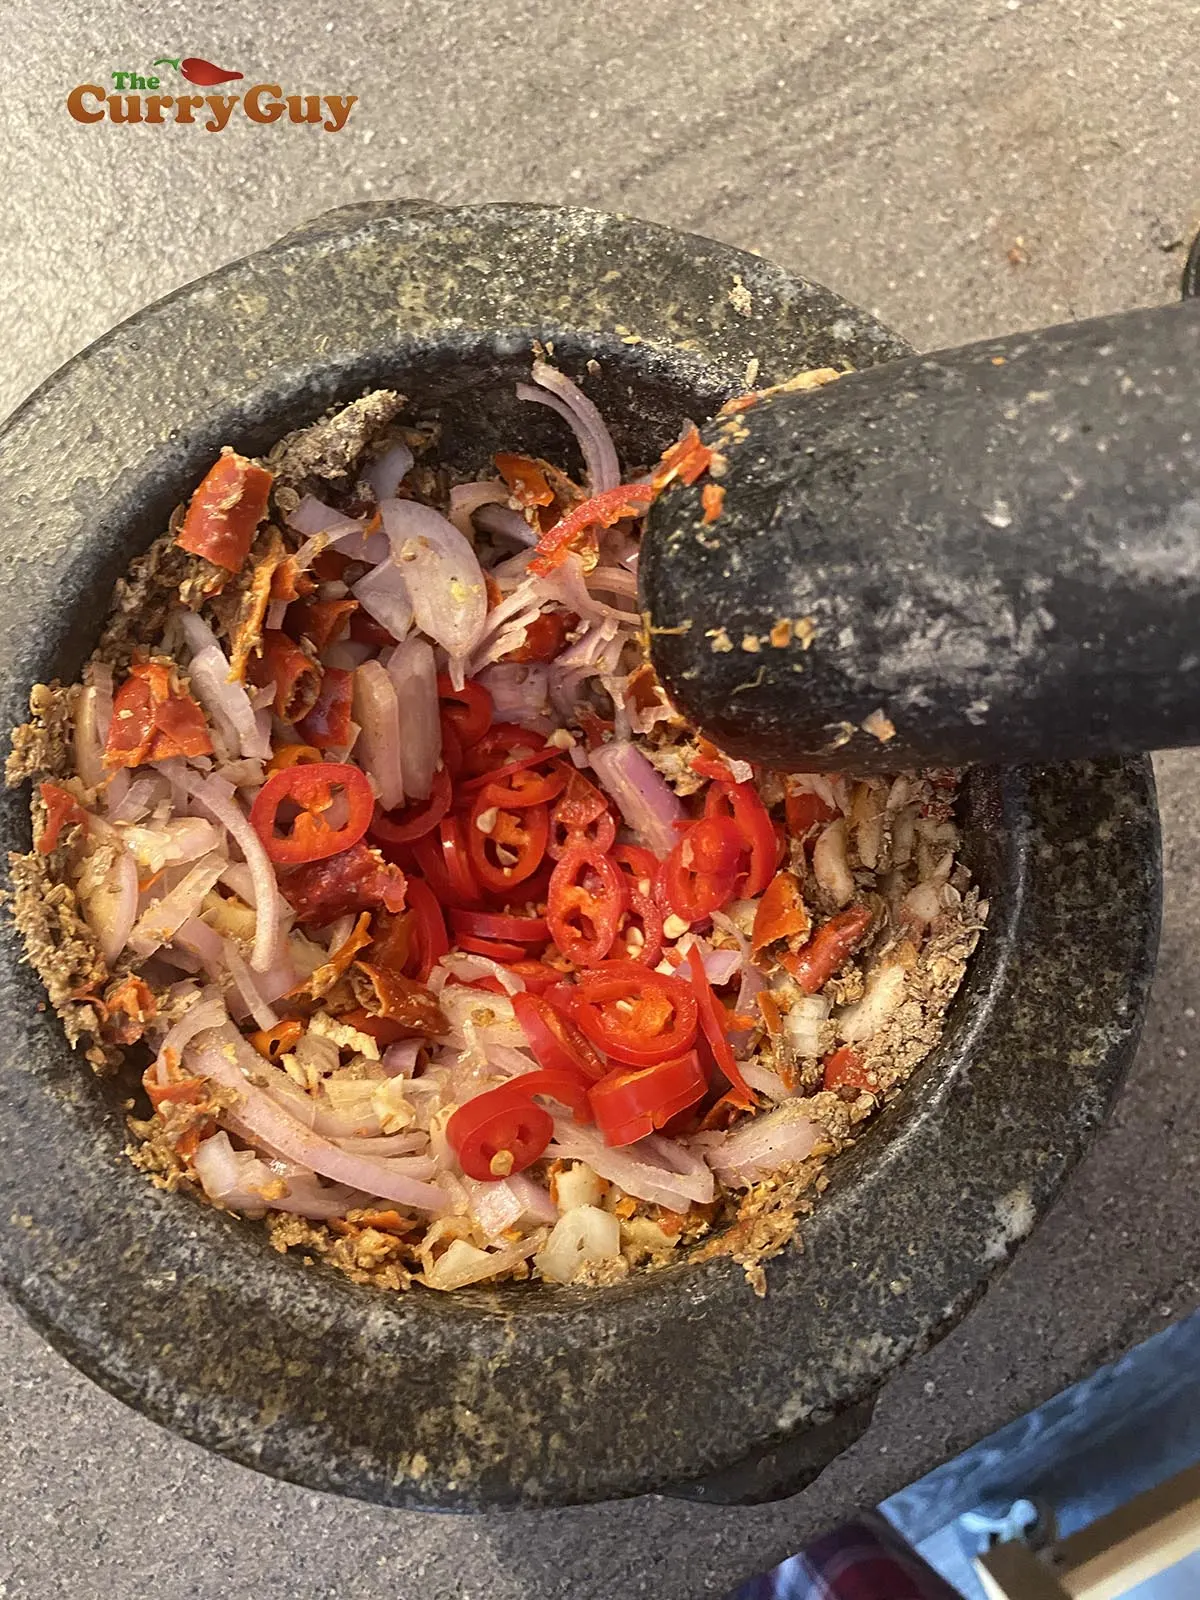 Adding spur chillies